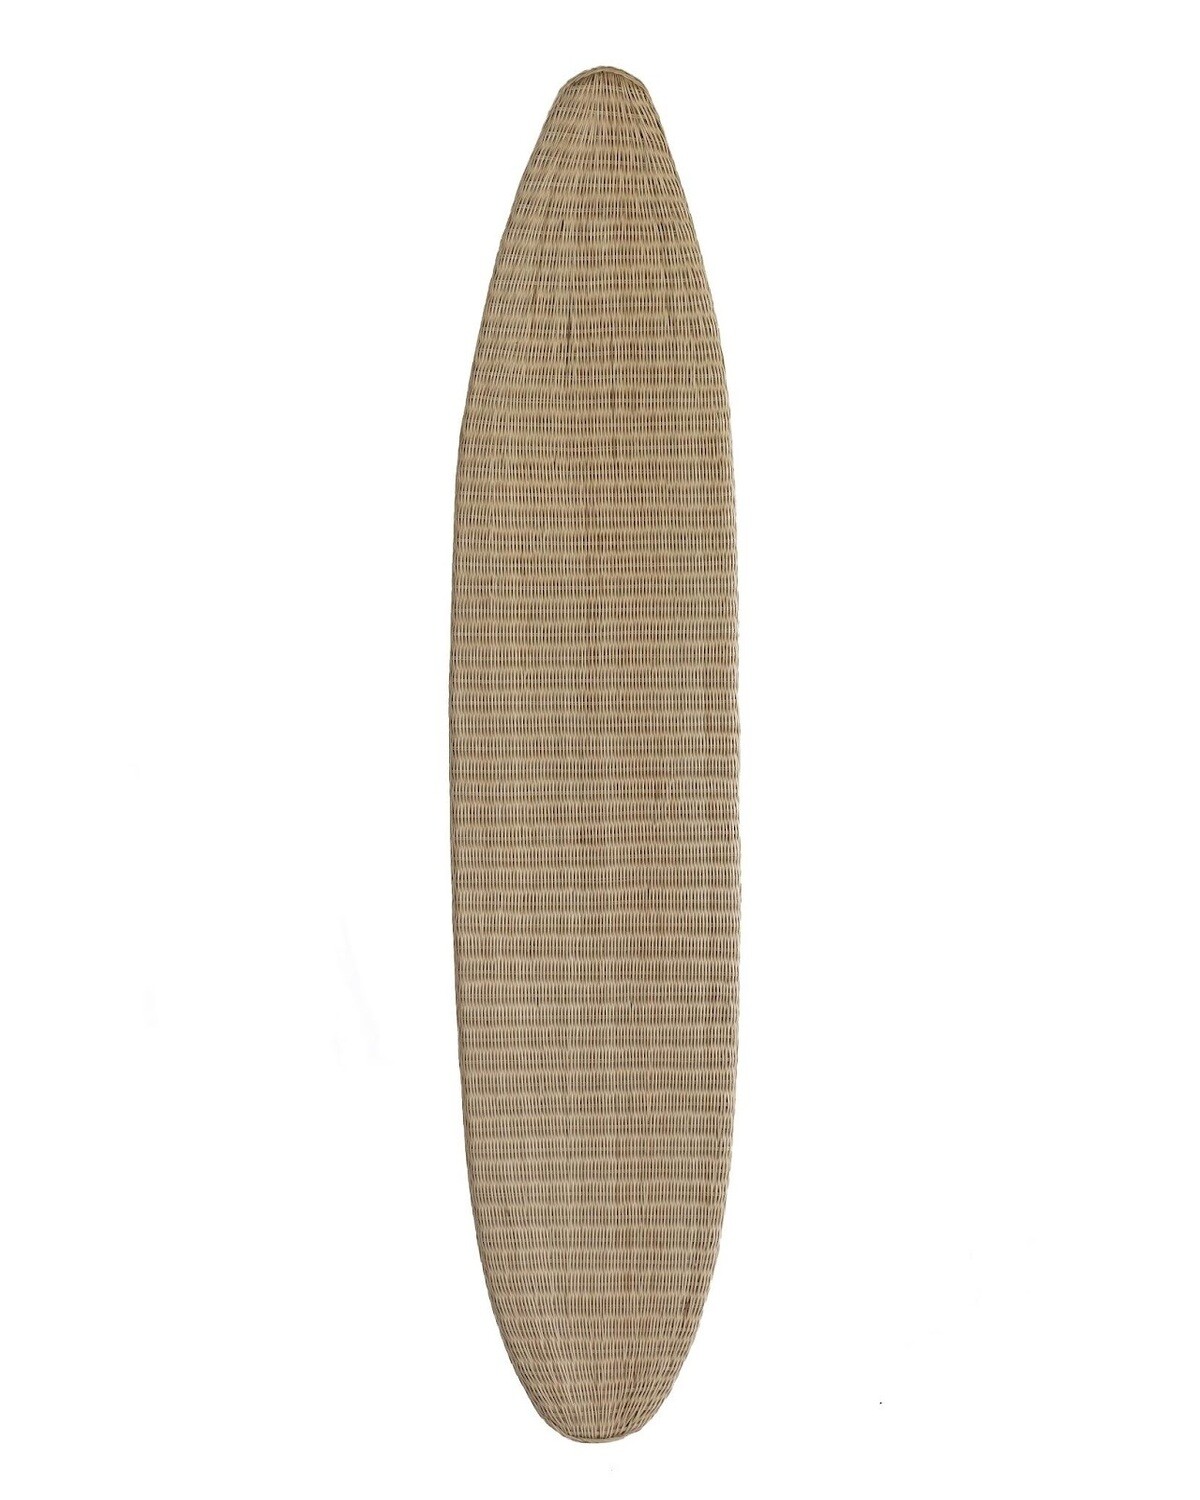 Rattan Surfboard 1